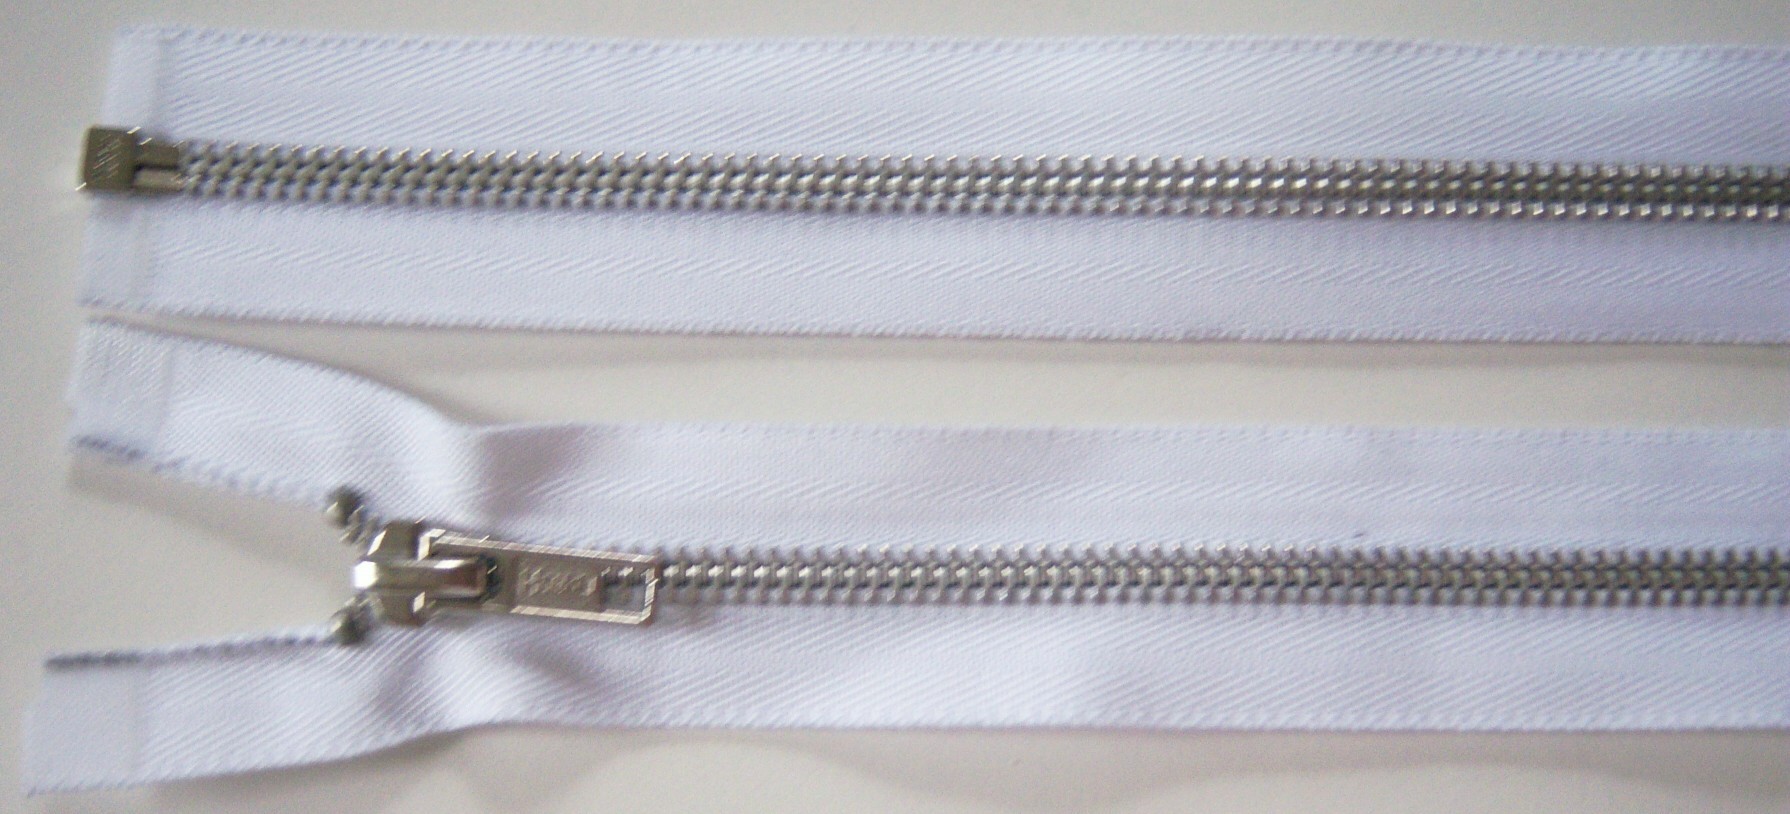 White Ideal 25 1/2" Nickel Metal Separating Zipper